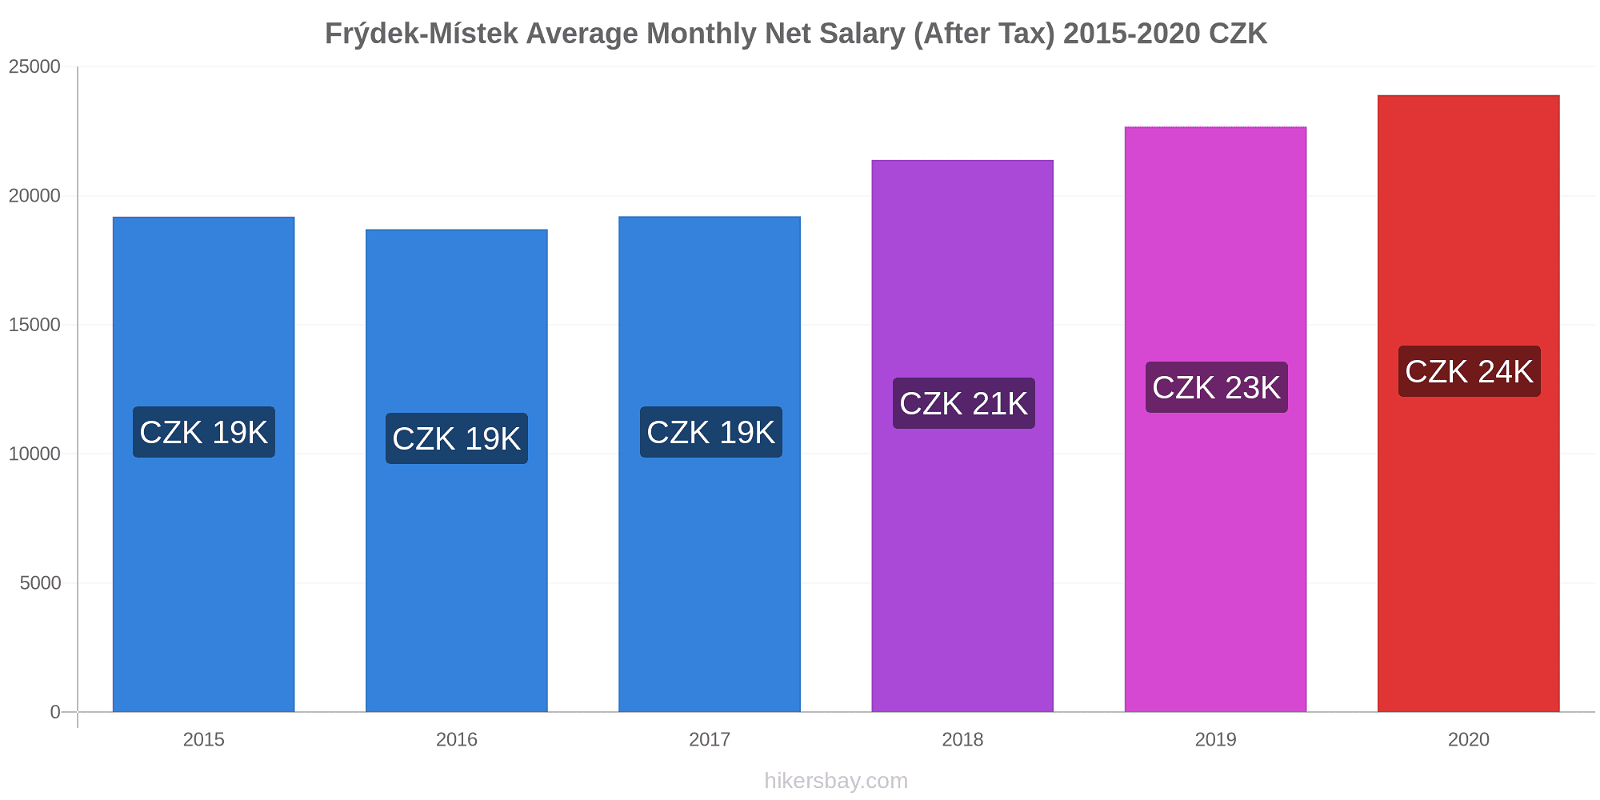 Frýdek-Místek price changes Average Monthly Net Salary (After Tax) hikersbay.com